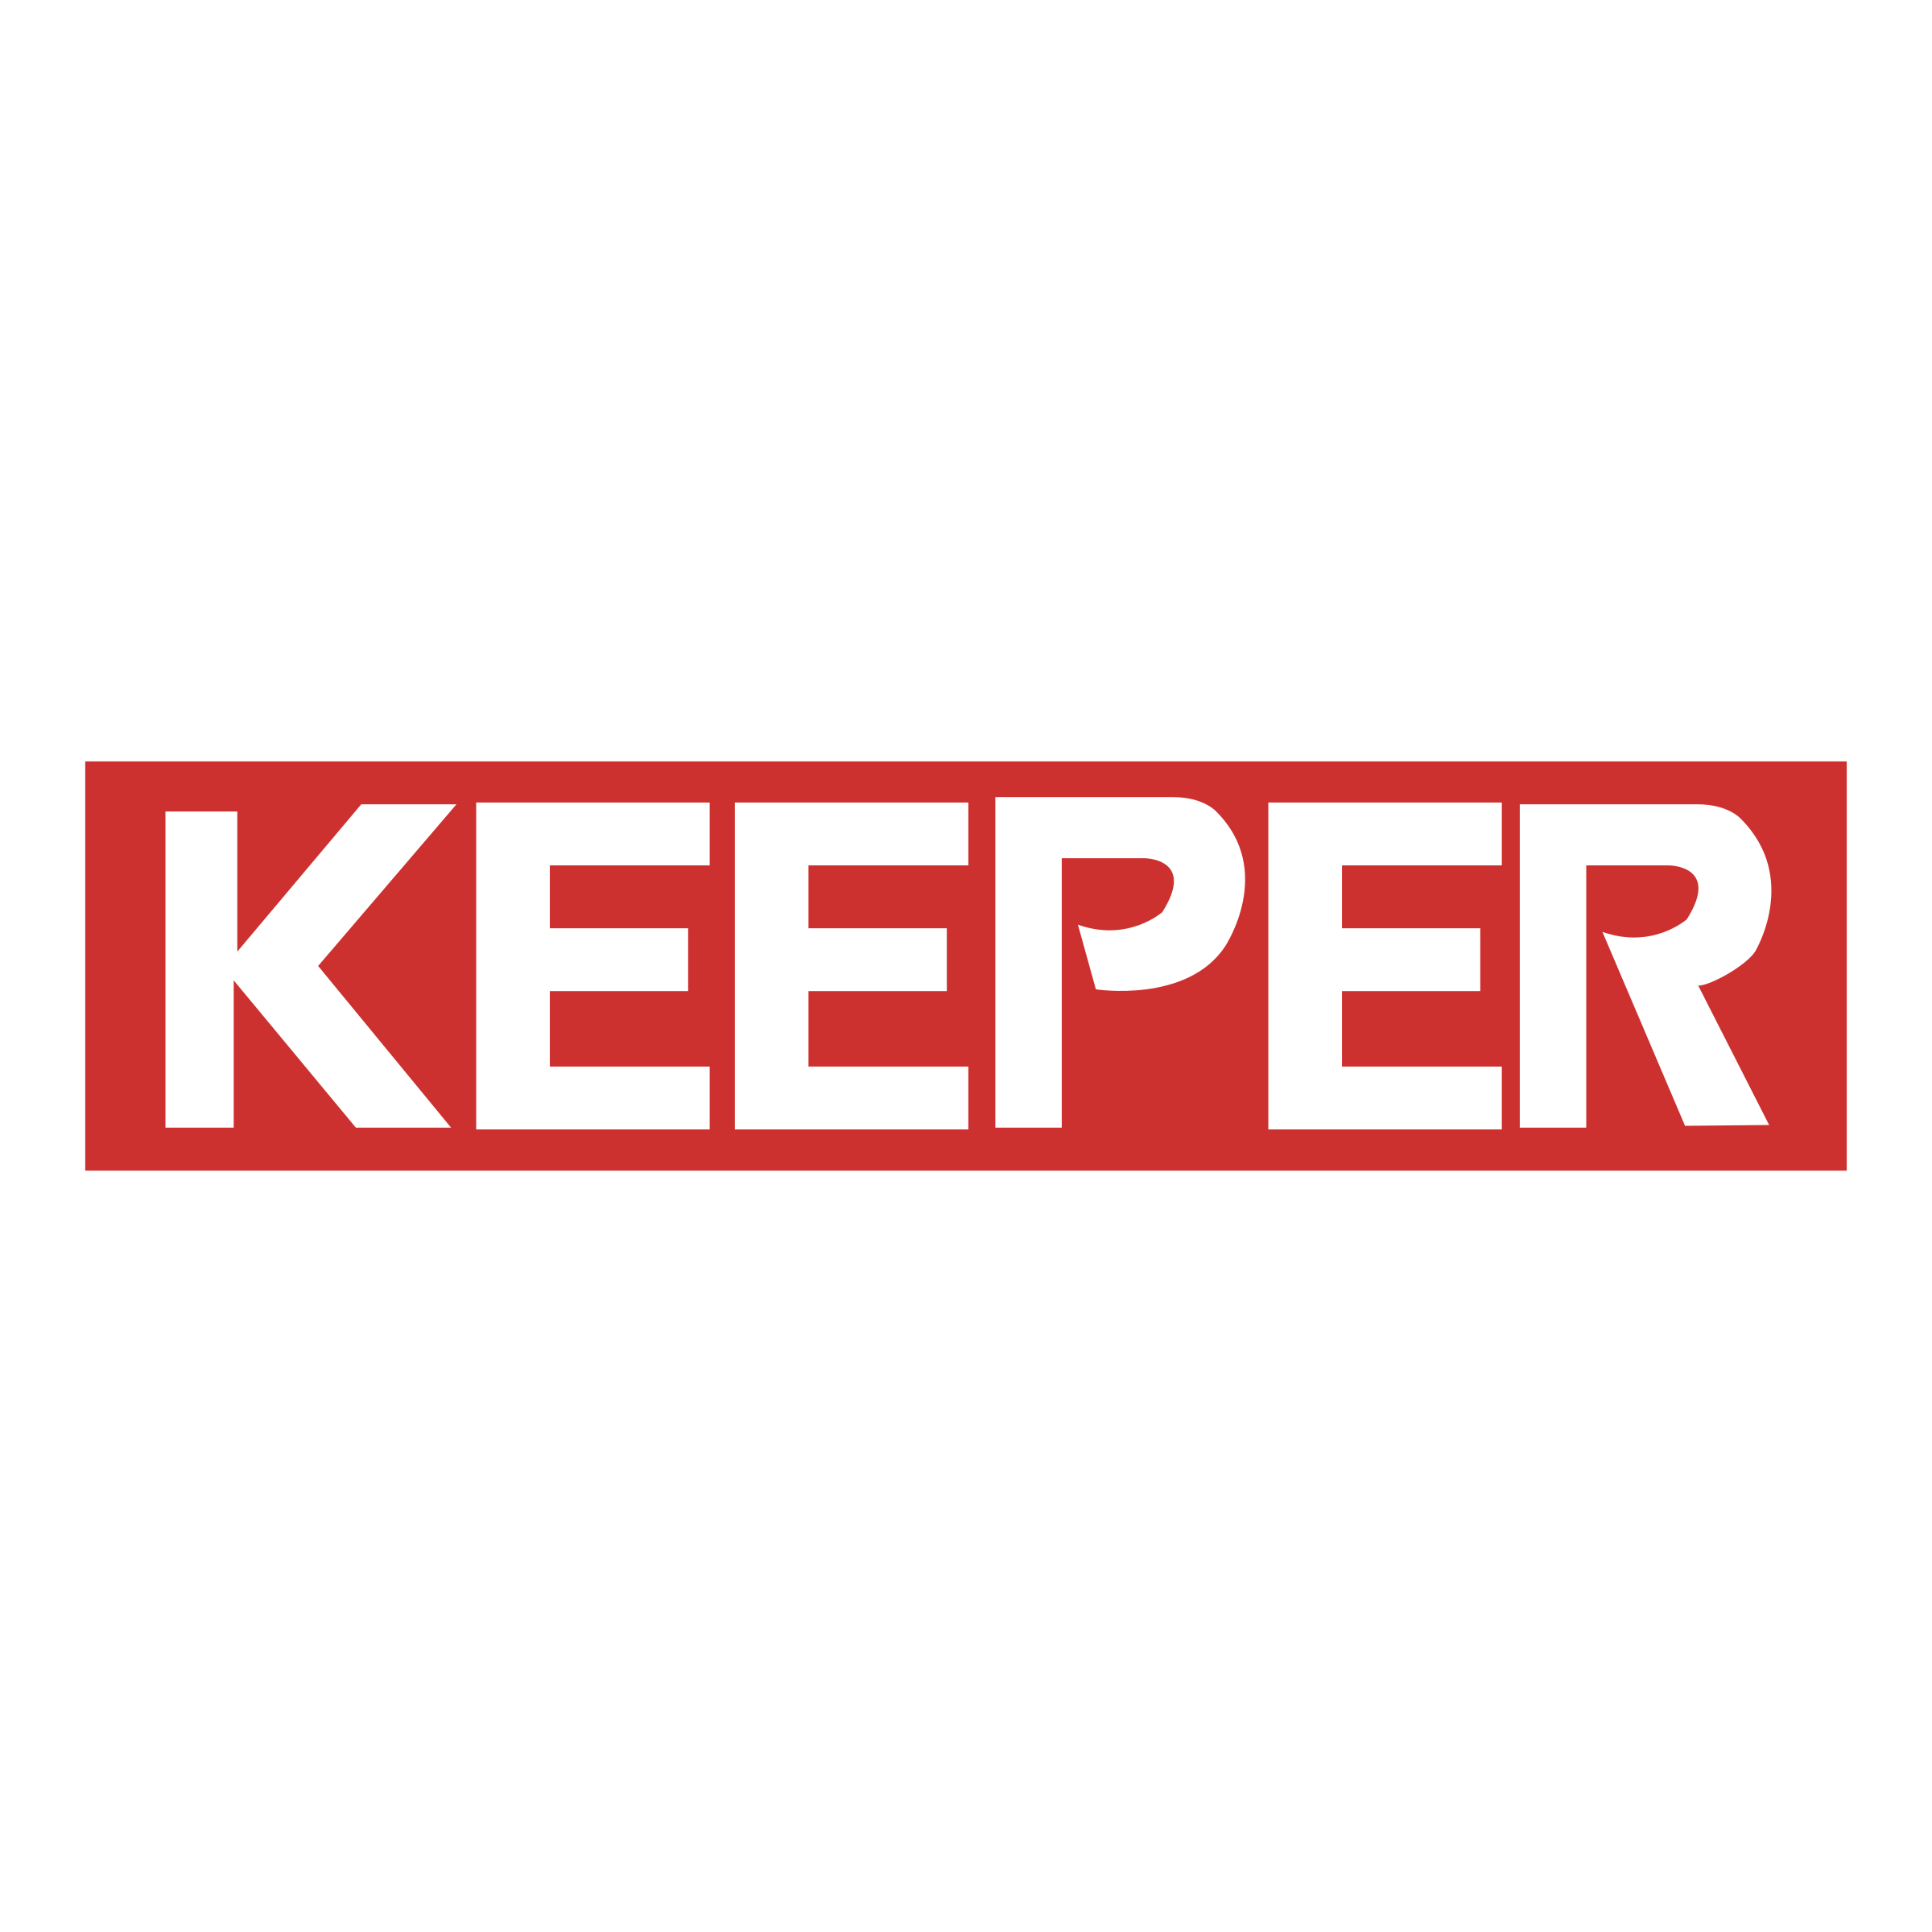 Keeper Logo - Keeper Logo PNG Transparent & SVG Vector - Freebie Supply